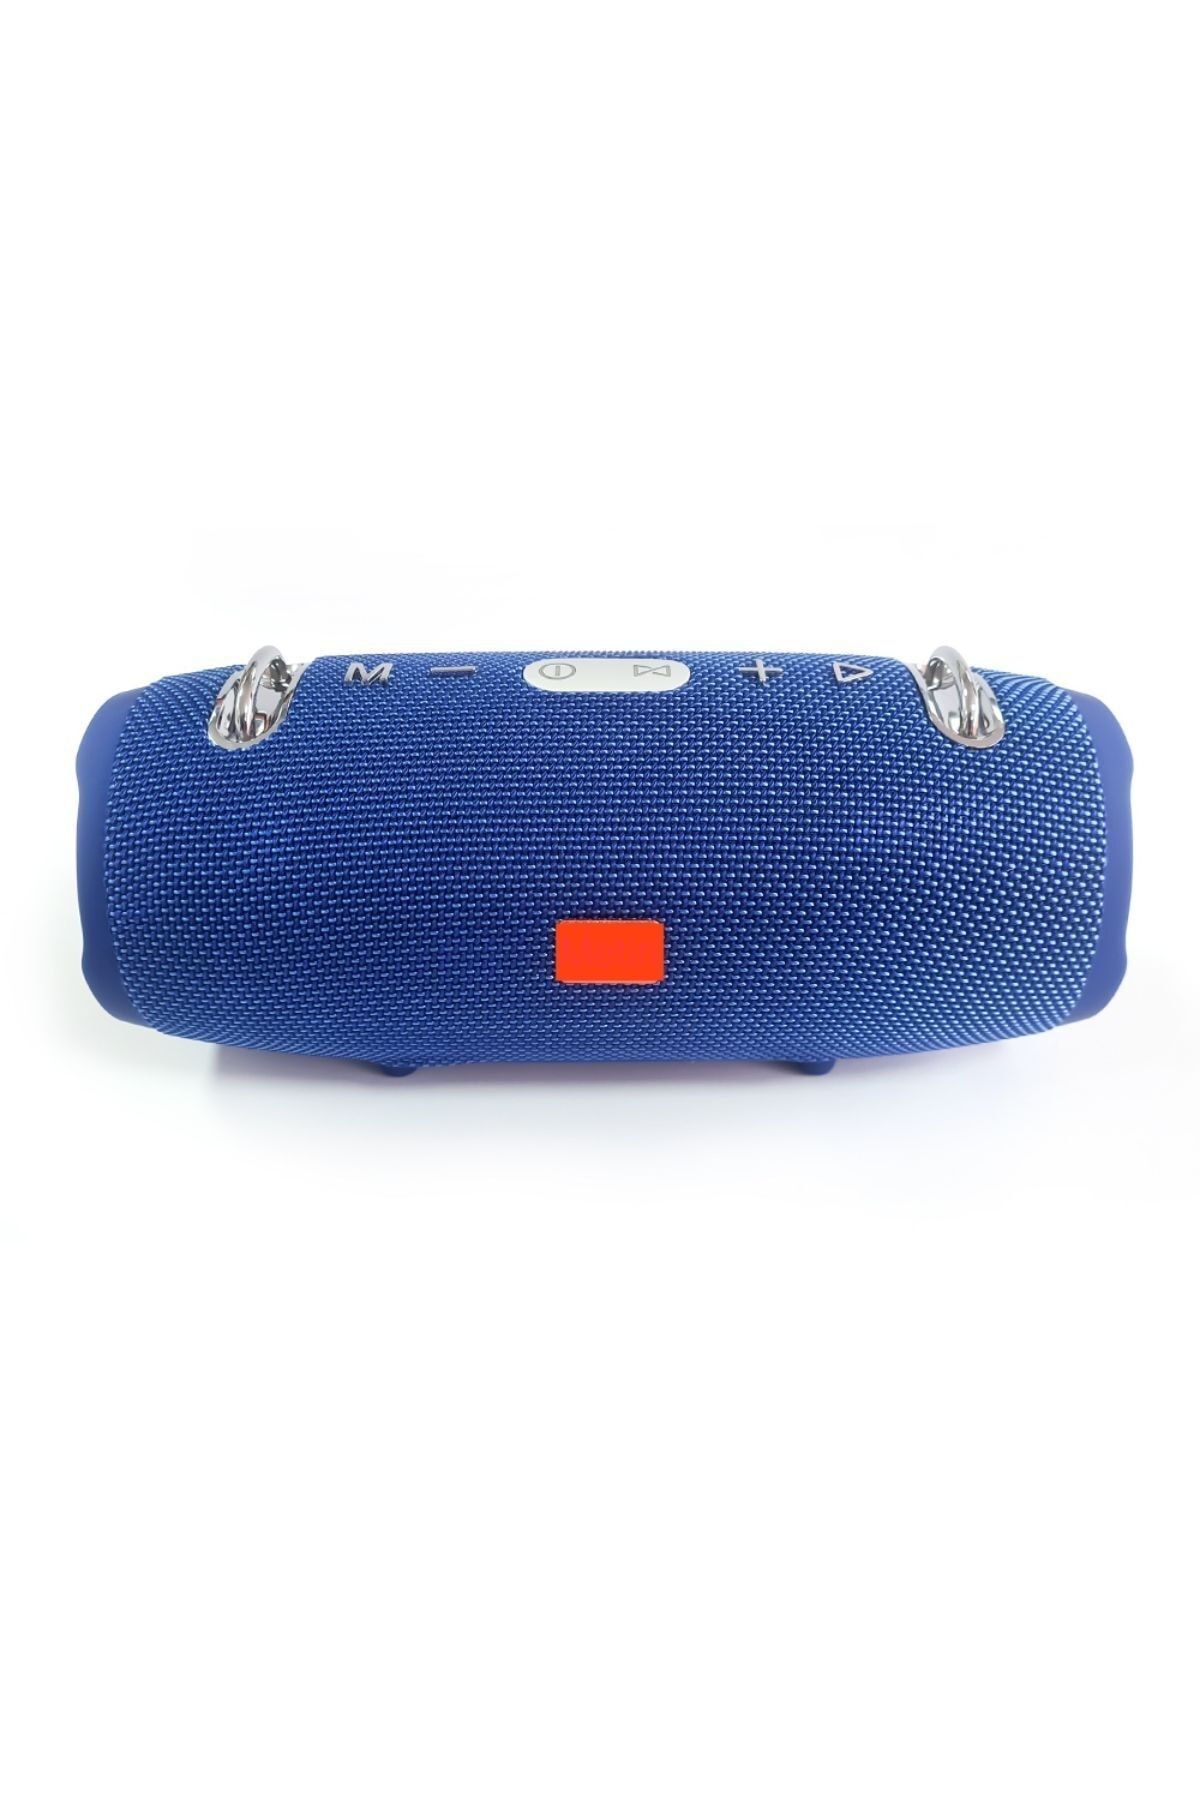 Lisa Butik Xtreme 2 Su Geçirmez Taşınabilir Askılı Speaker Bluetooth Hoparlör Extra Bass